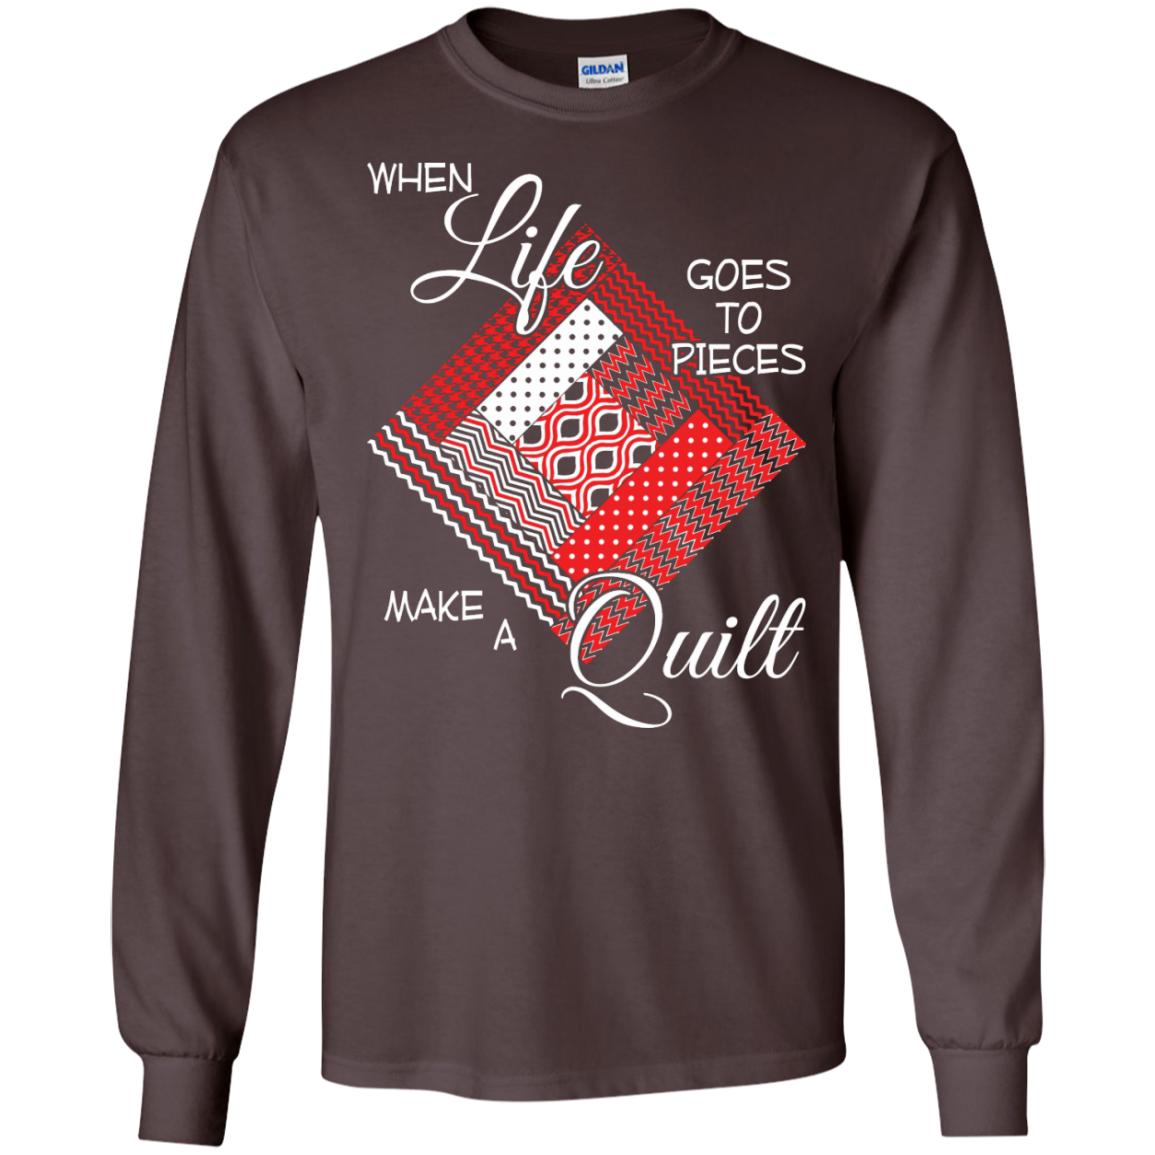 Make a Quilt (red) Long Sleeve Ultra Cotton T-Shirt - Crafter4Life - 3